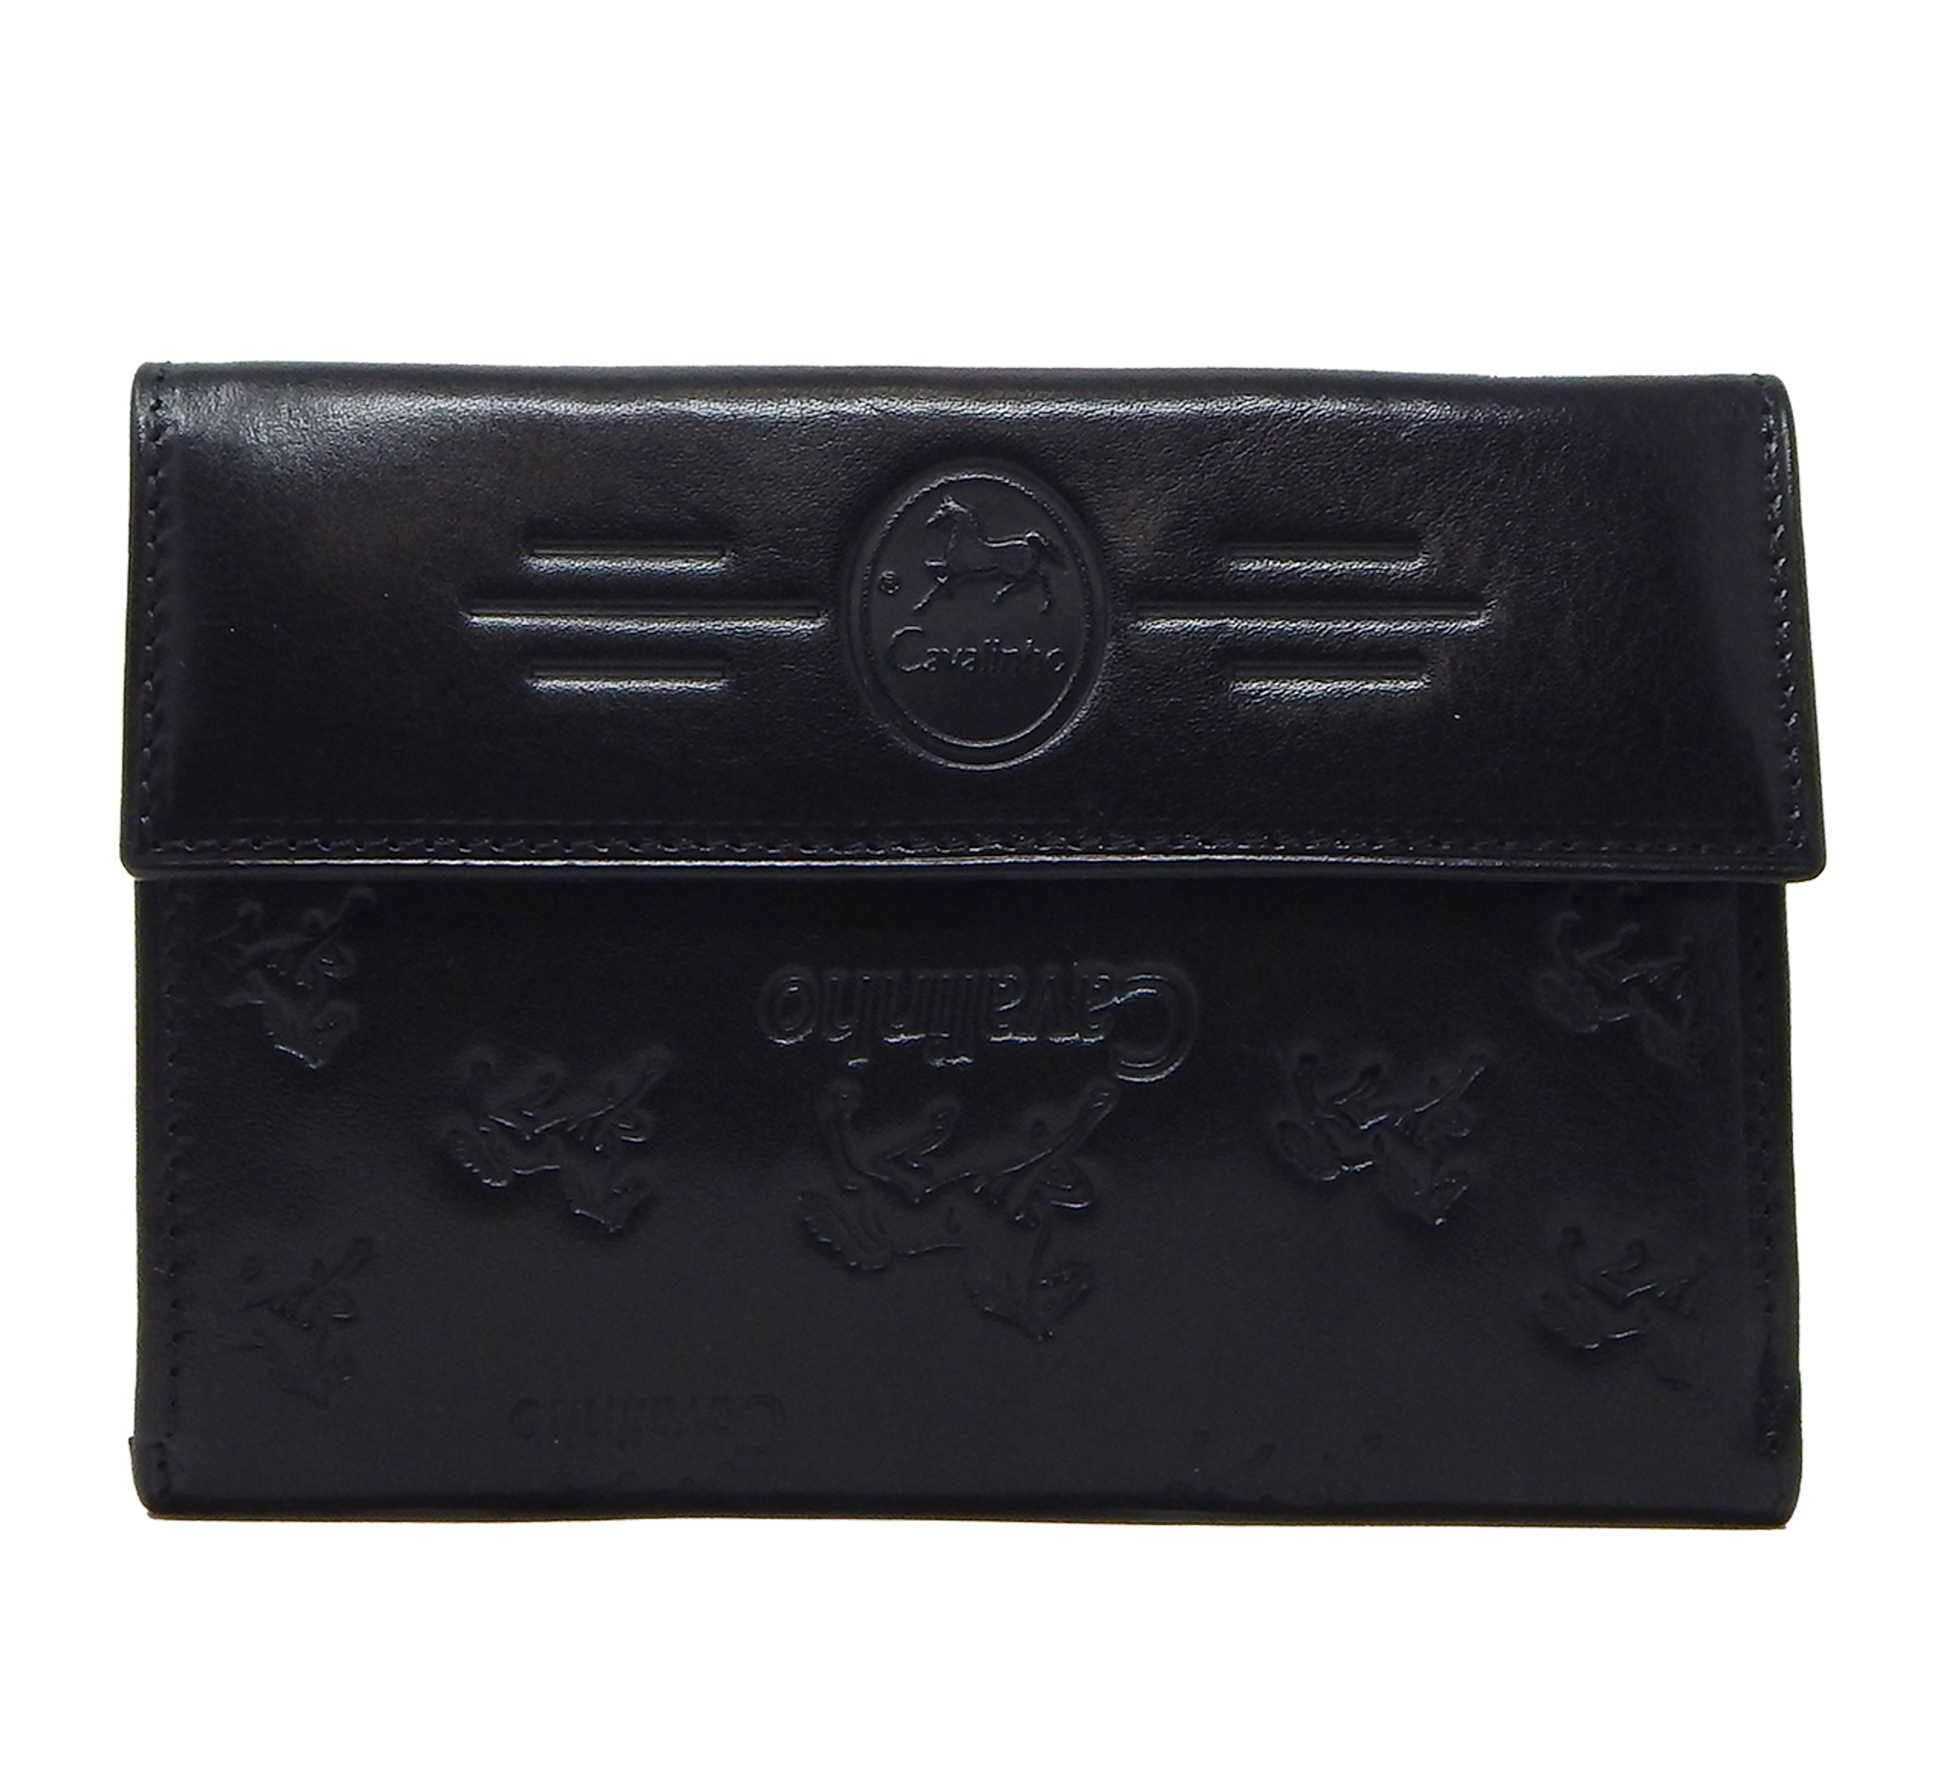 Cavalinho Cavalo Lusitano Leather Wallet - Black - 28090204_01_b_1